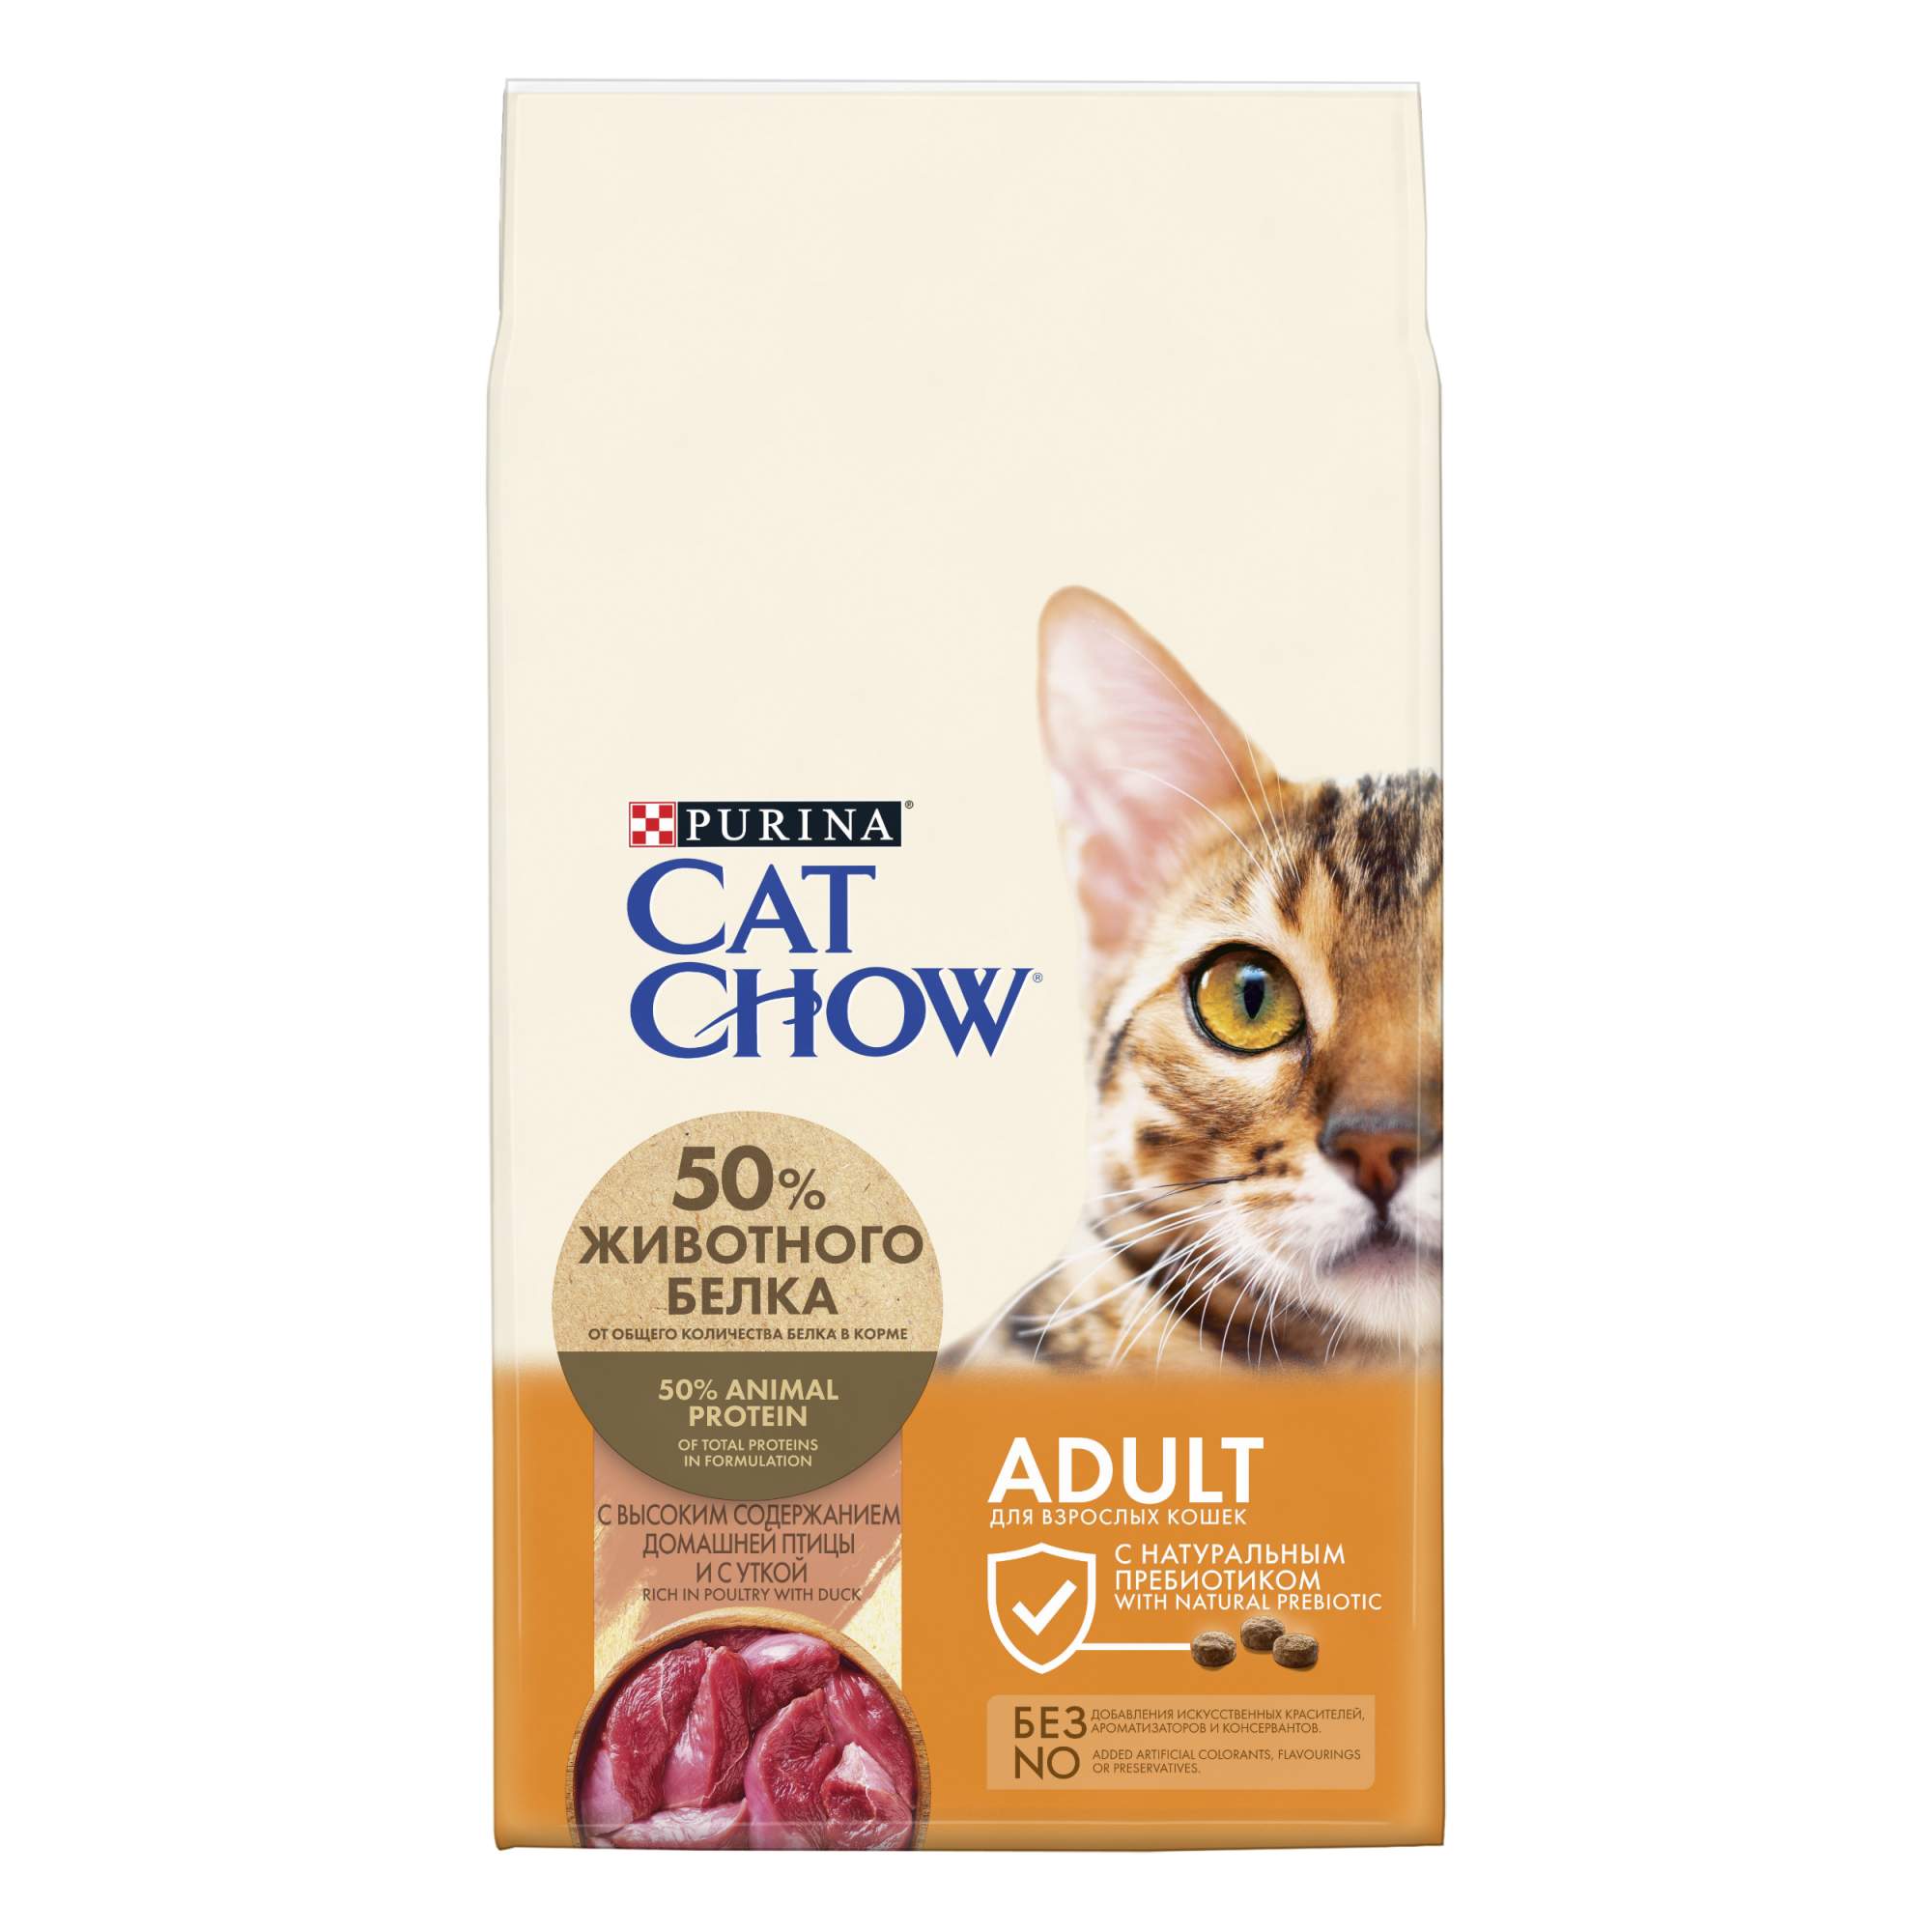 Сухой корм для кошек Cat Chow Adult, утка, 7кг